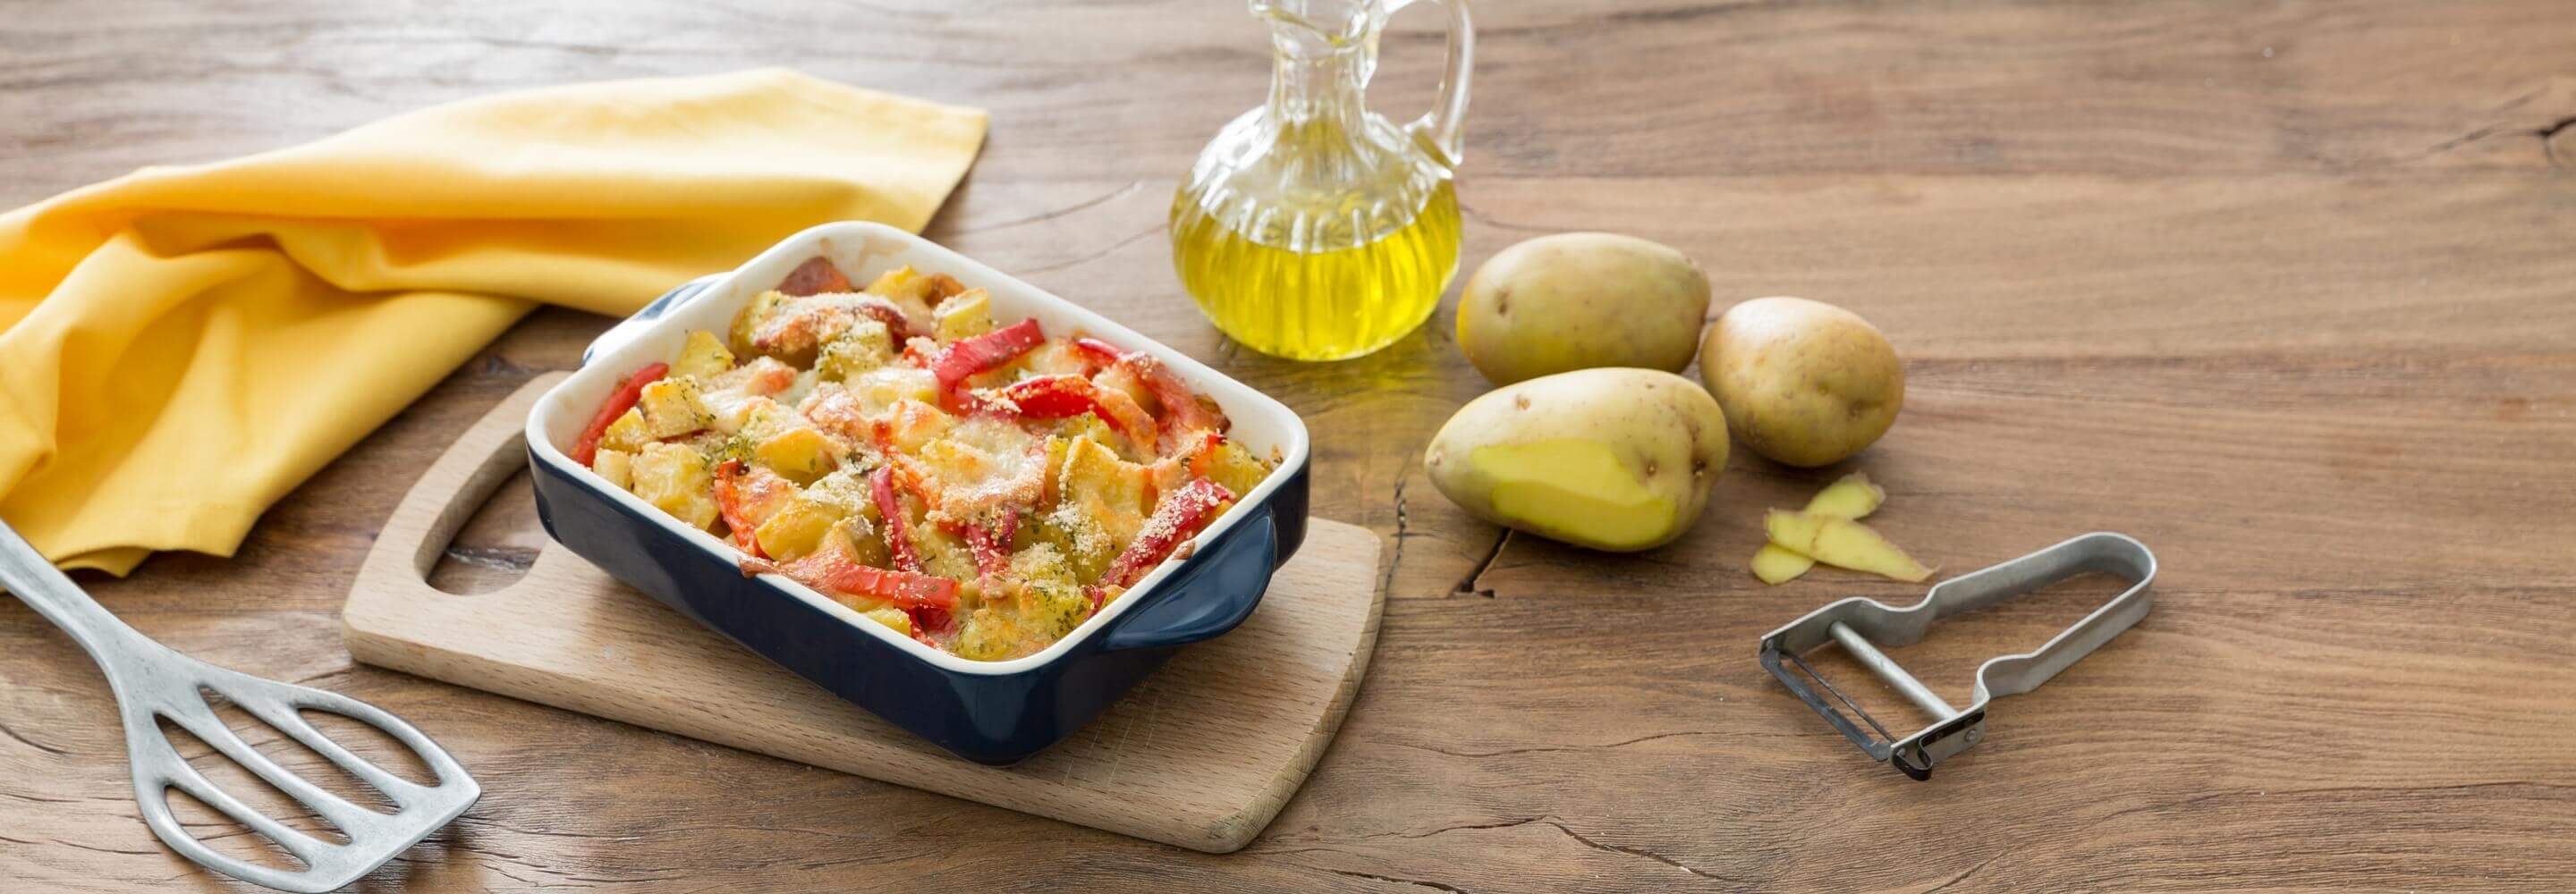 Überbackene Peperoni und Kartoffeln mit Mozzarella